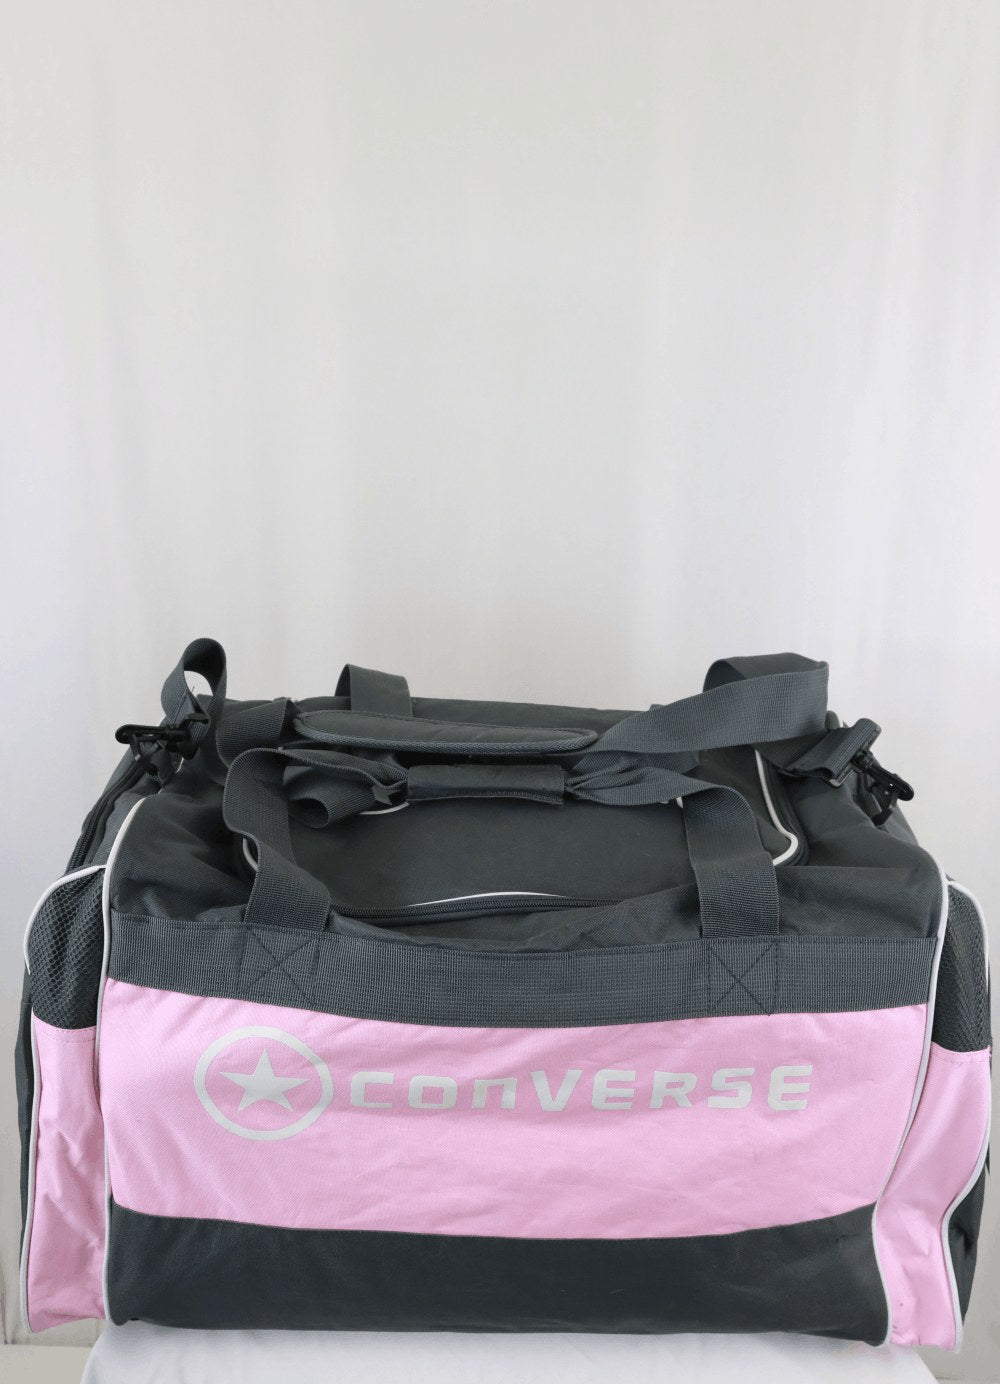 Converse Pink And Grey Large Duffle Bag